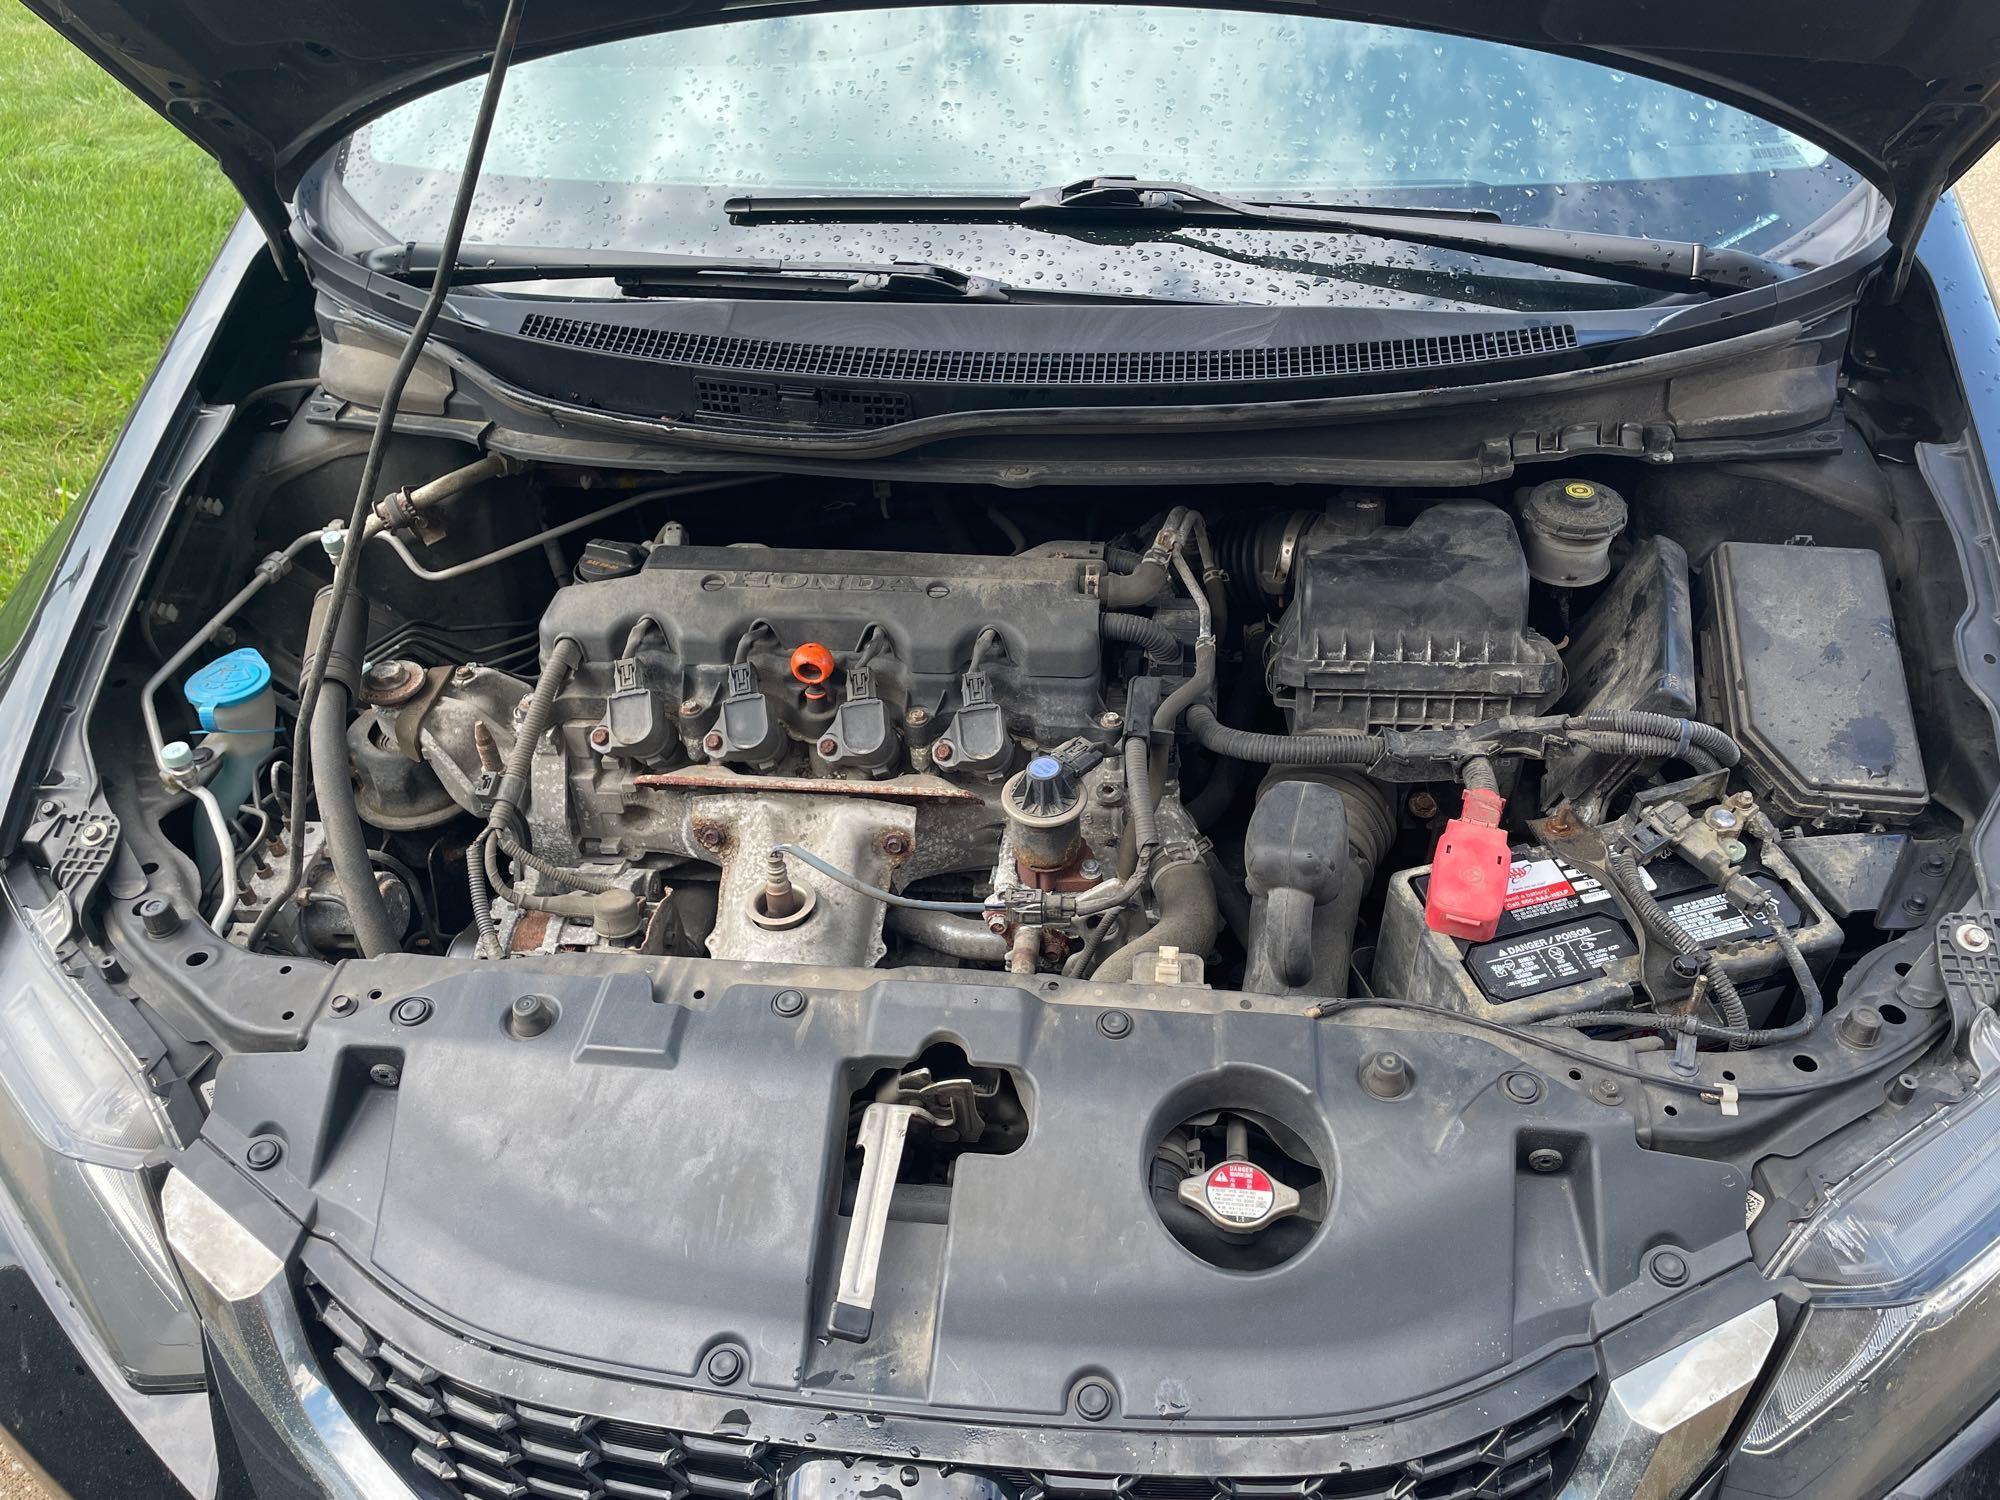 2014 Honda Civic EX - 190K mi - Auto Trans. - 1.8L 4cyc engine